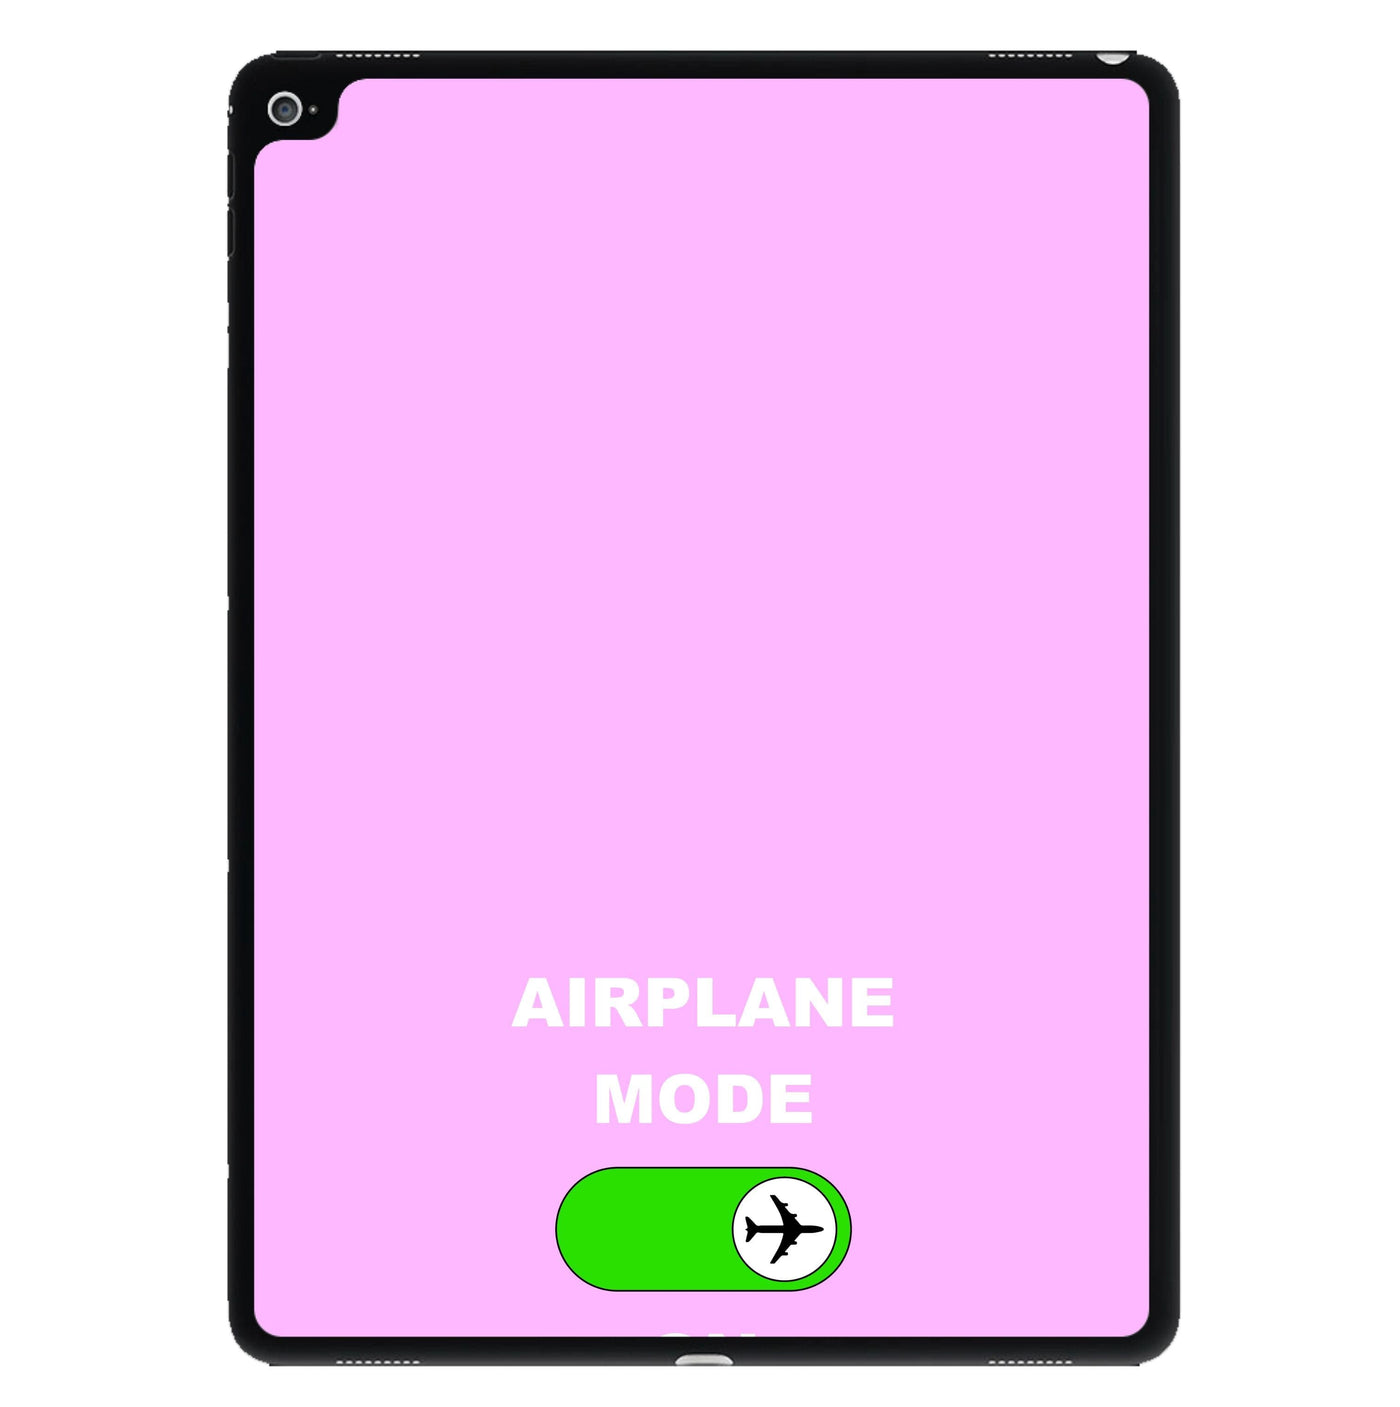 Airplane Mode On - Travel iPad Case